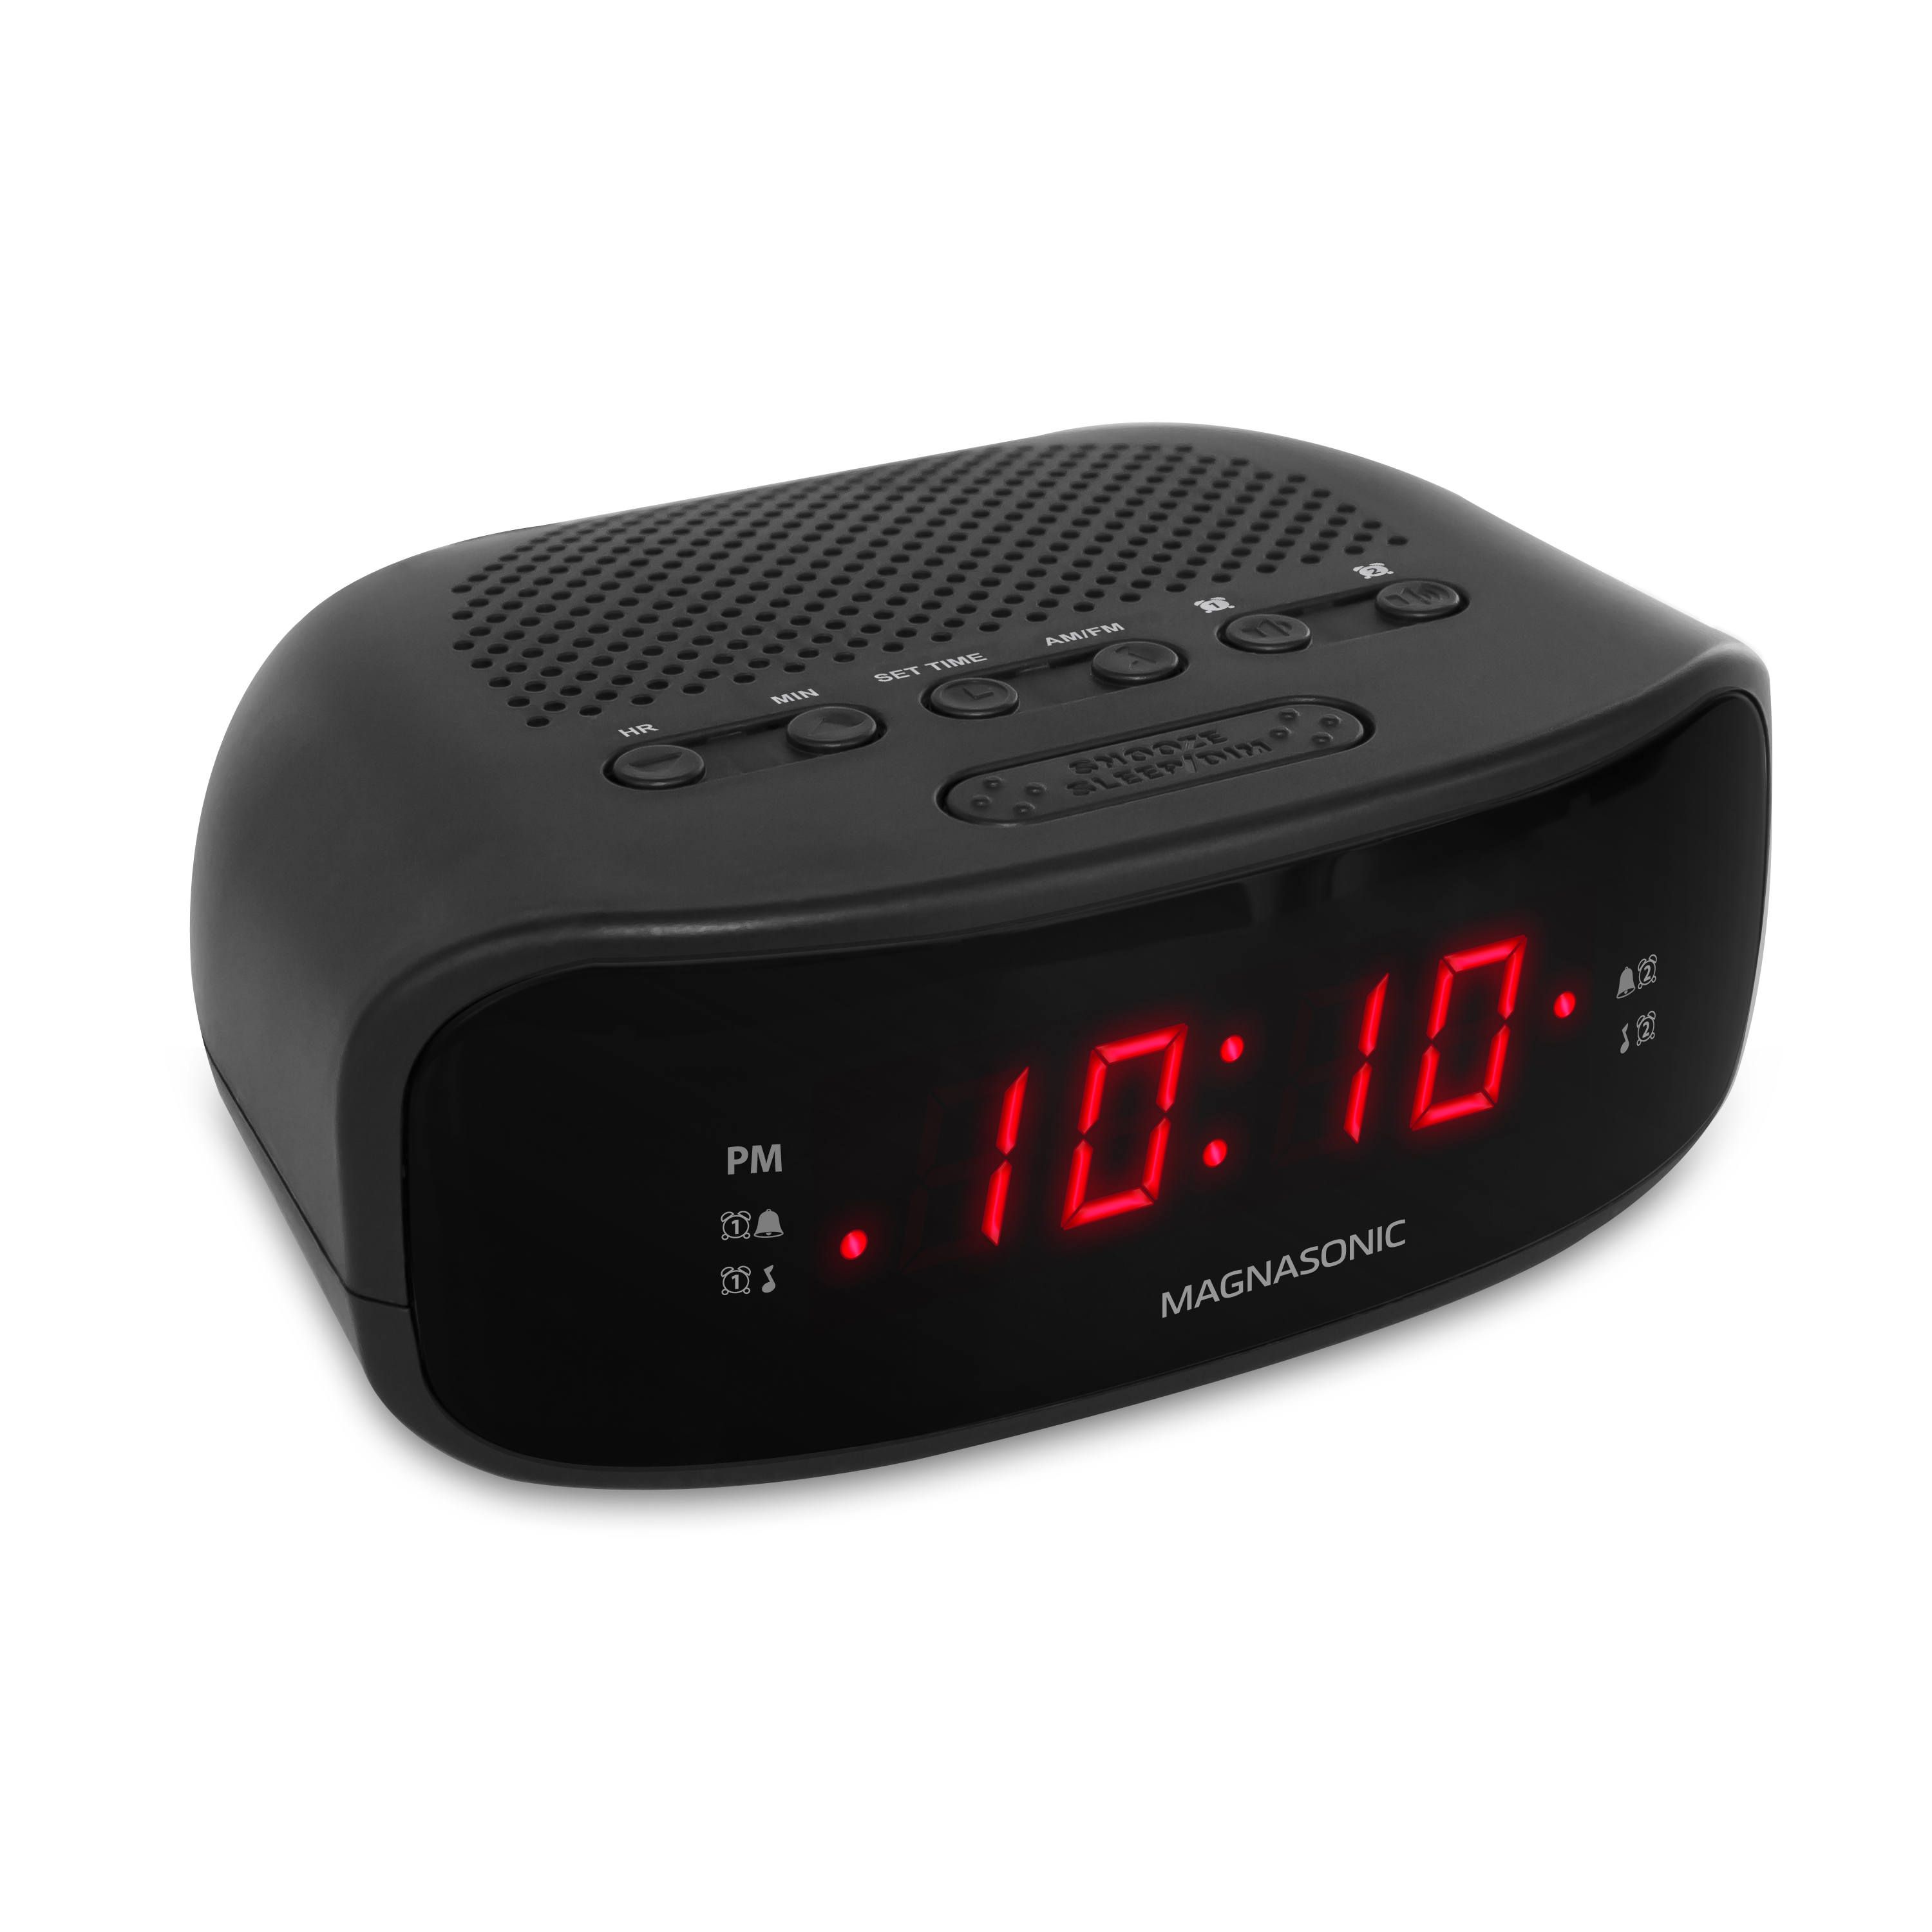 Magnasonic Digital AM/FM Clock Radio with Battery Backup, Dual Alarm, Sleep/Snooze Functions, Display Dimming - 2 Pack